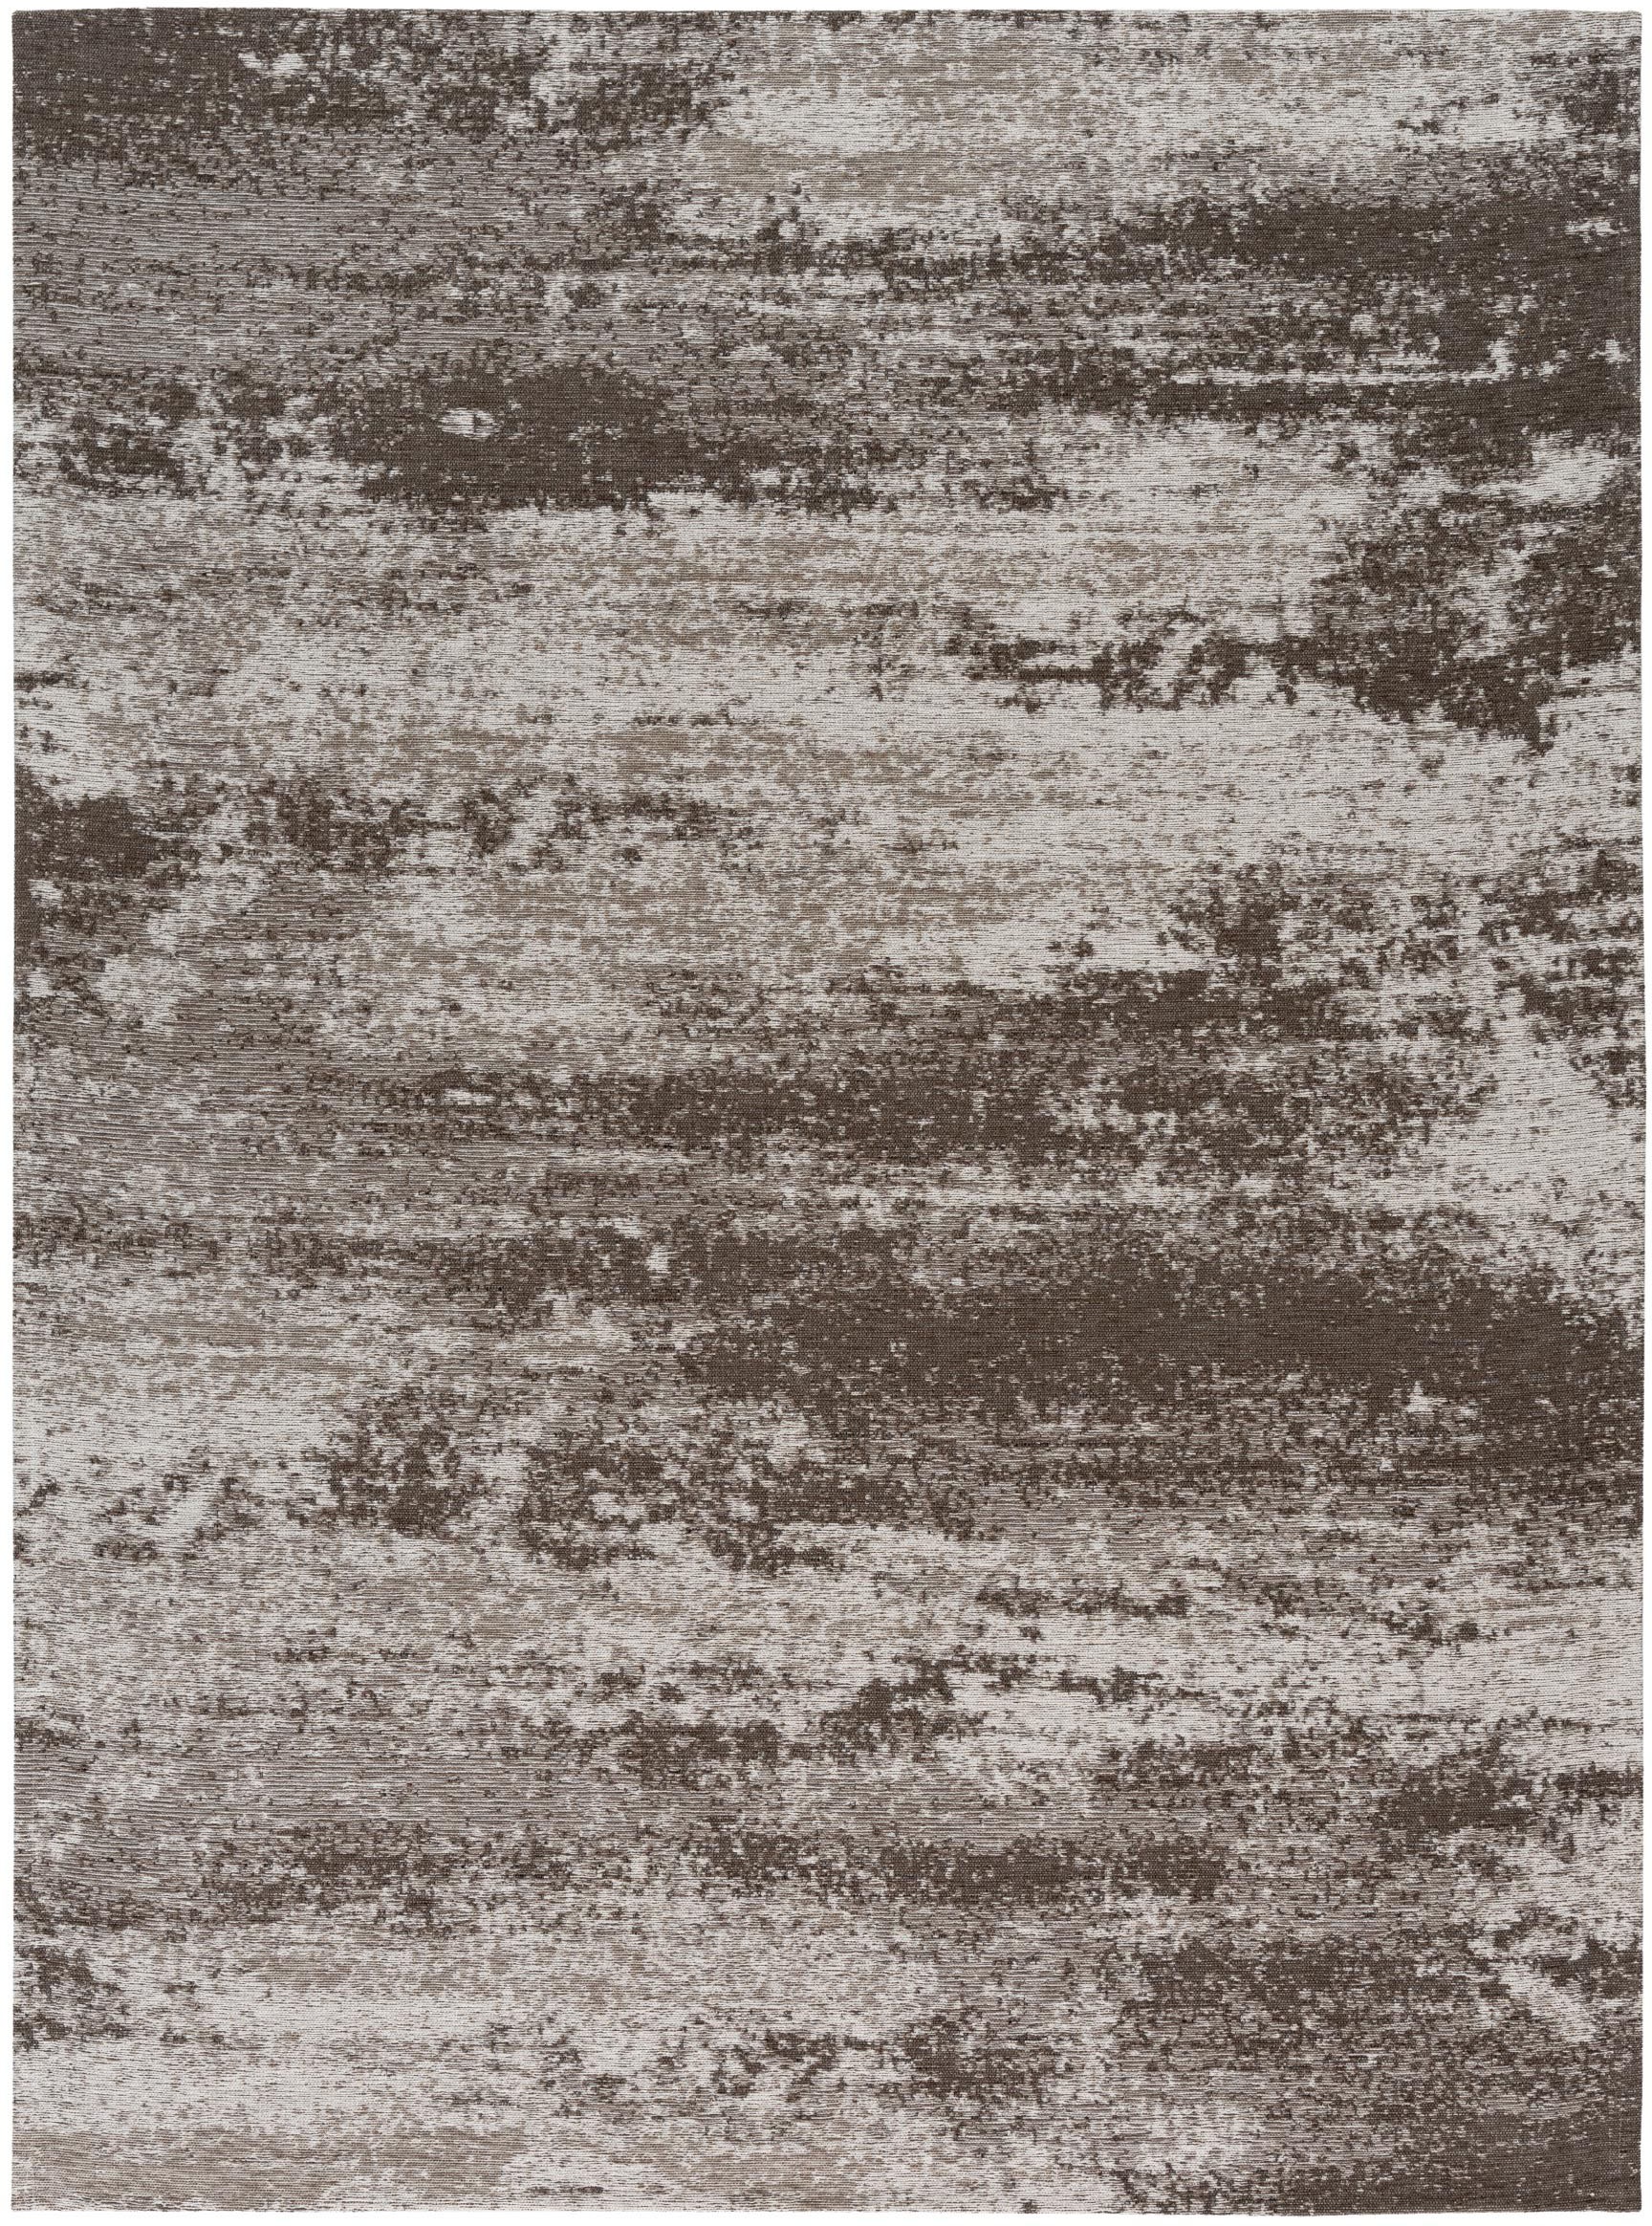 kaufen 6963«, Teppich Marmor- »Carina rutschfest, rechteckig, Design Optik, Sehrazat waschbar, abstraktes Flachgewebe, | BAUR